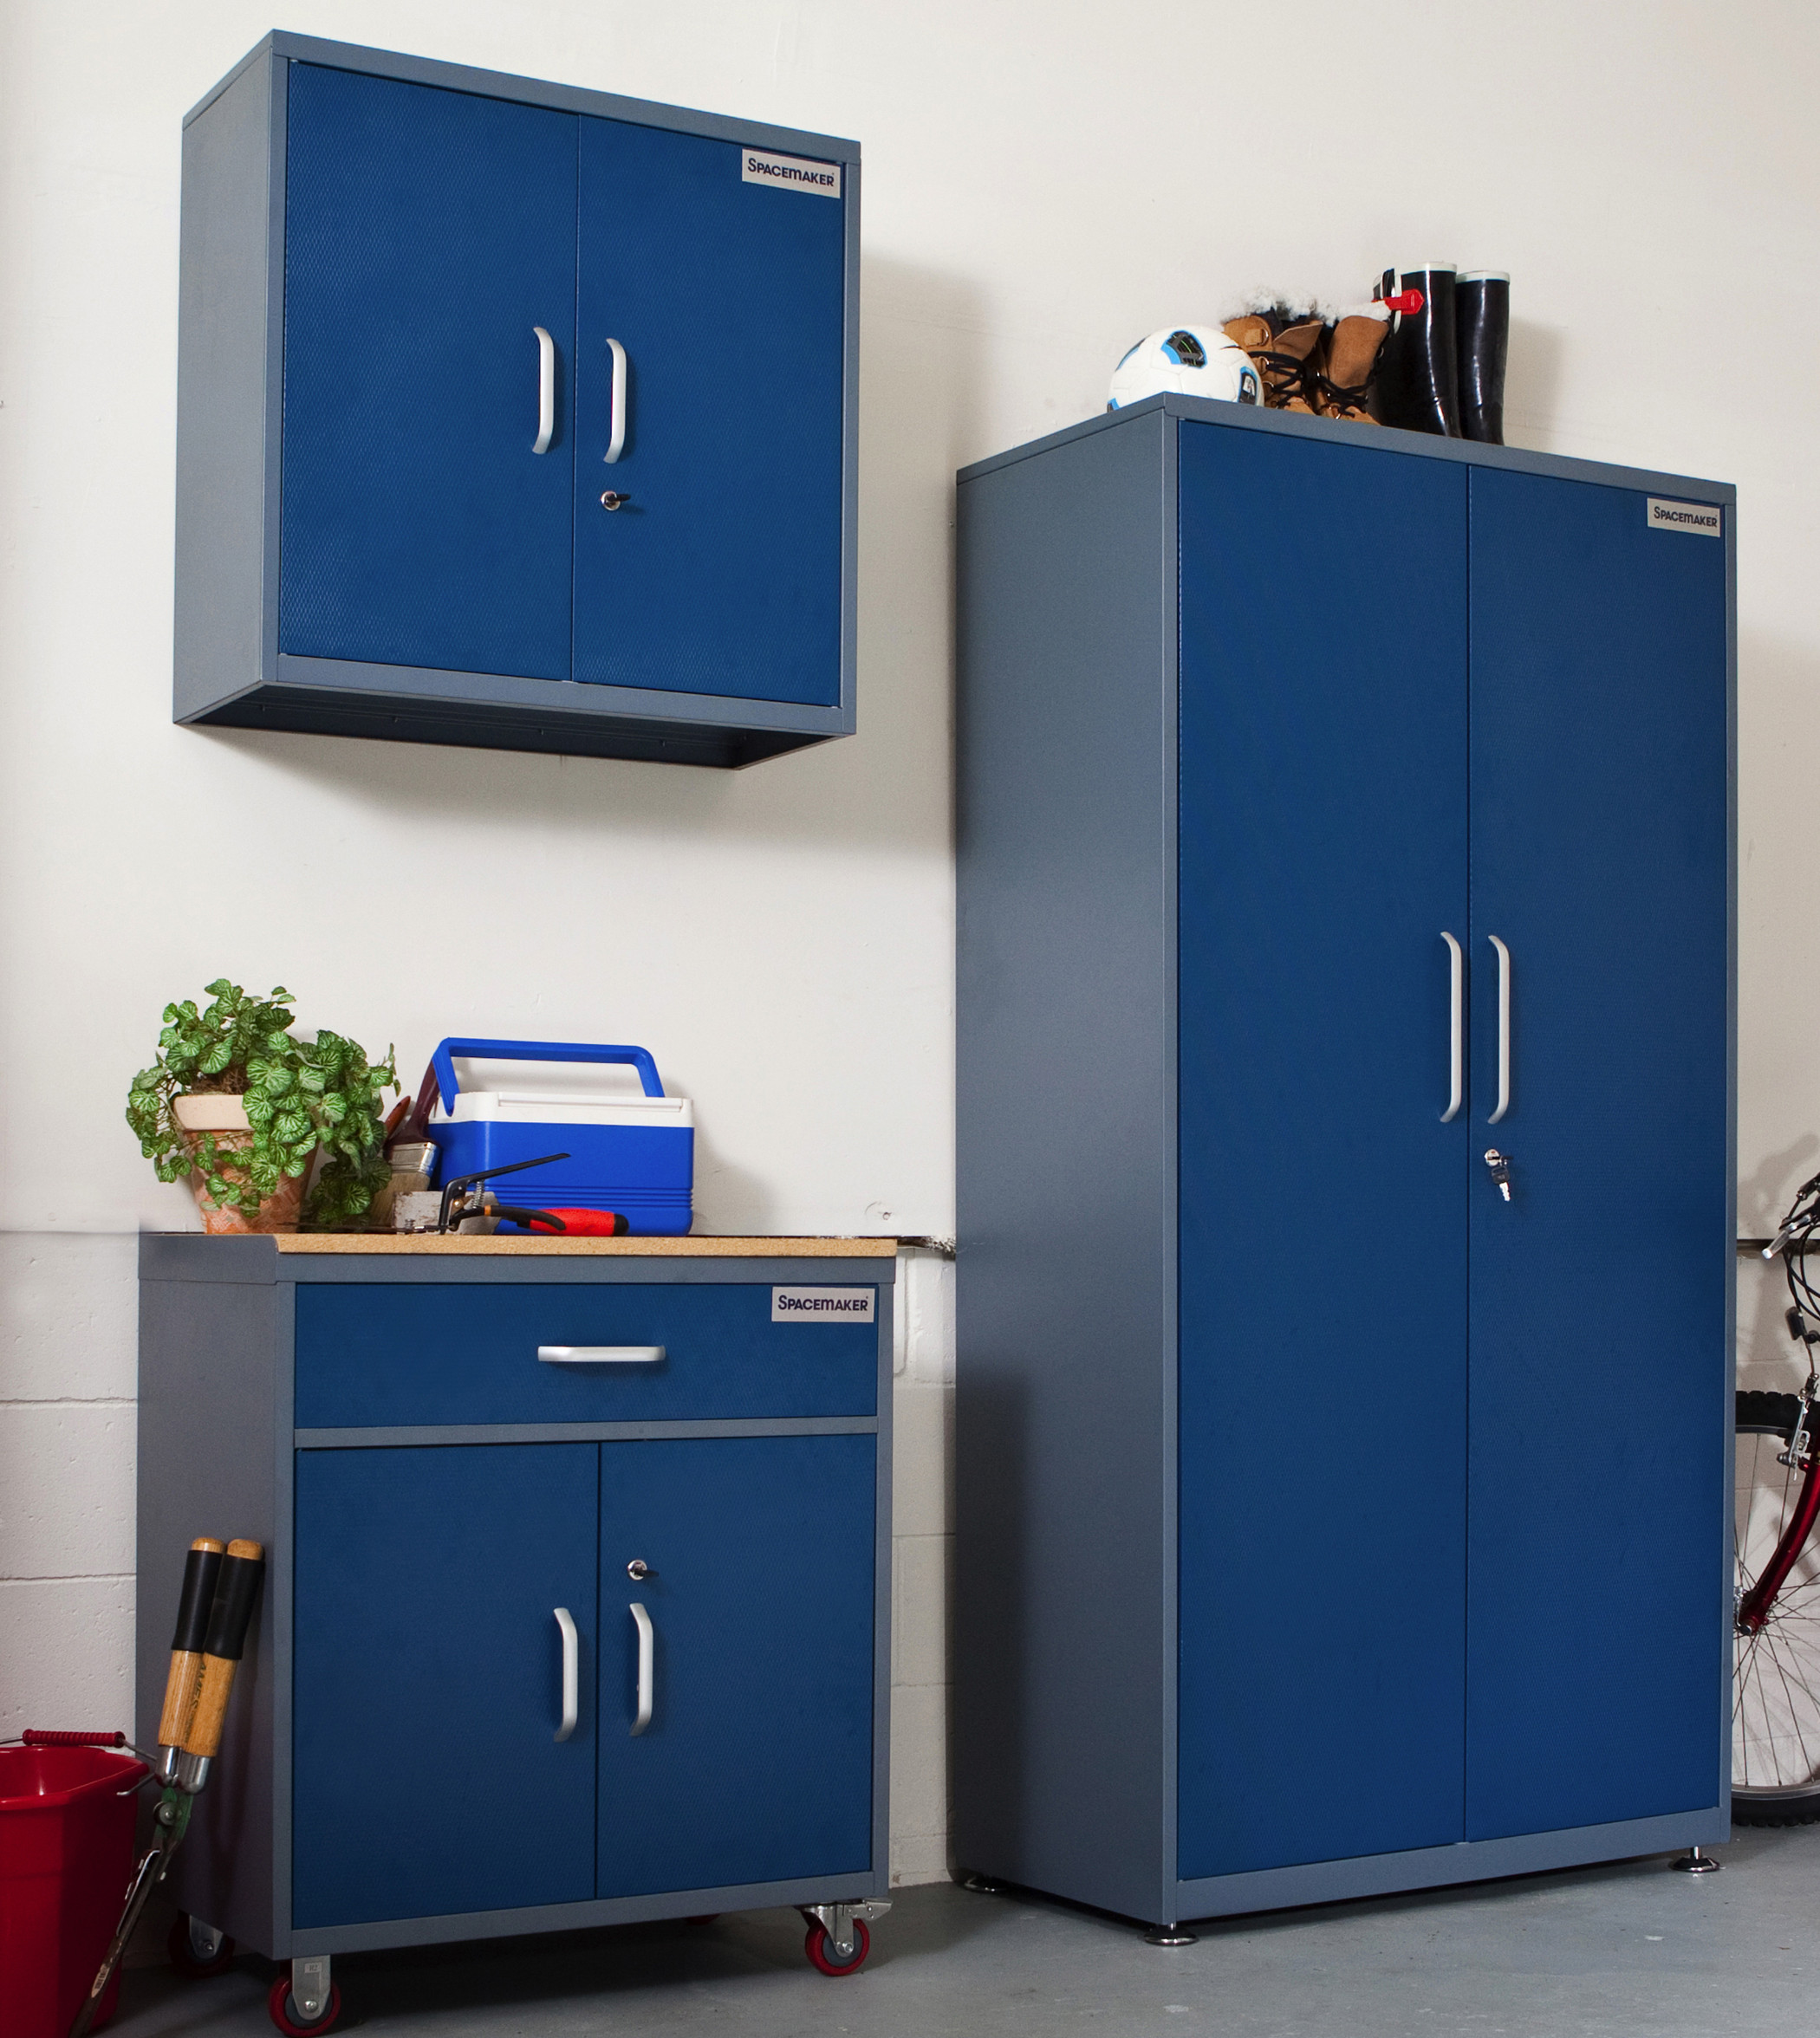 Best ideas about Metal Garage Storage Cabinets
. Save or Pin Blue Metal Garage Storage Cabinet Unit Stylish Design of Now.